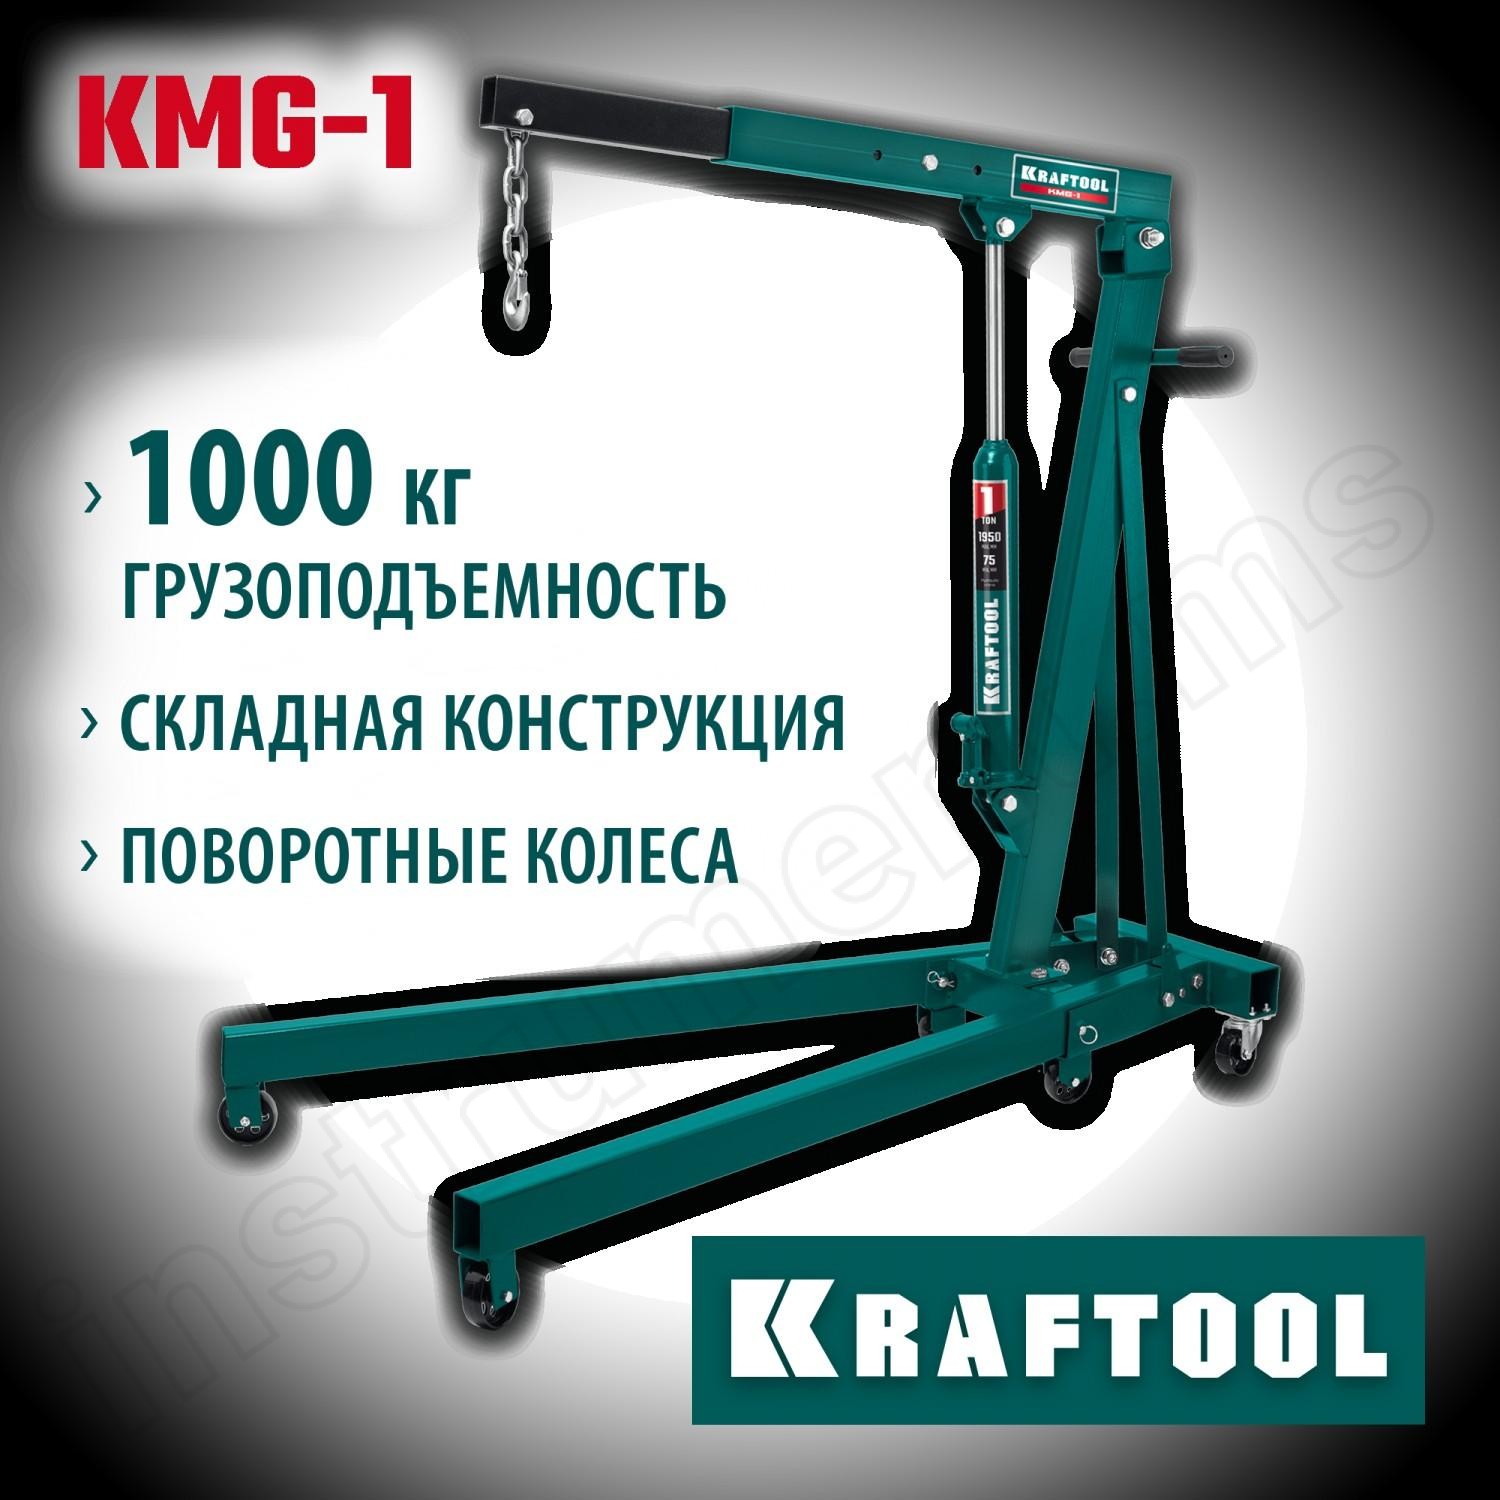 KRAFTOOL 1 т, 75-1950 мм, кран гидравлический складной KMG-1 43411-1 - фото 1